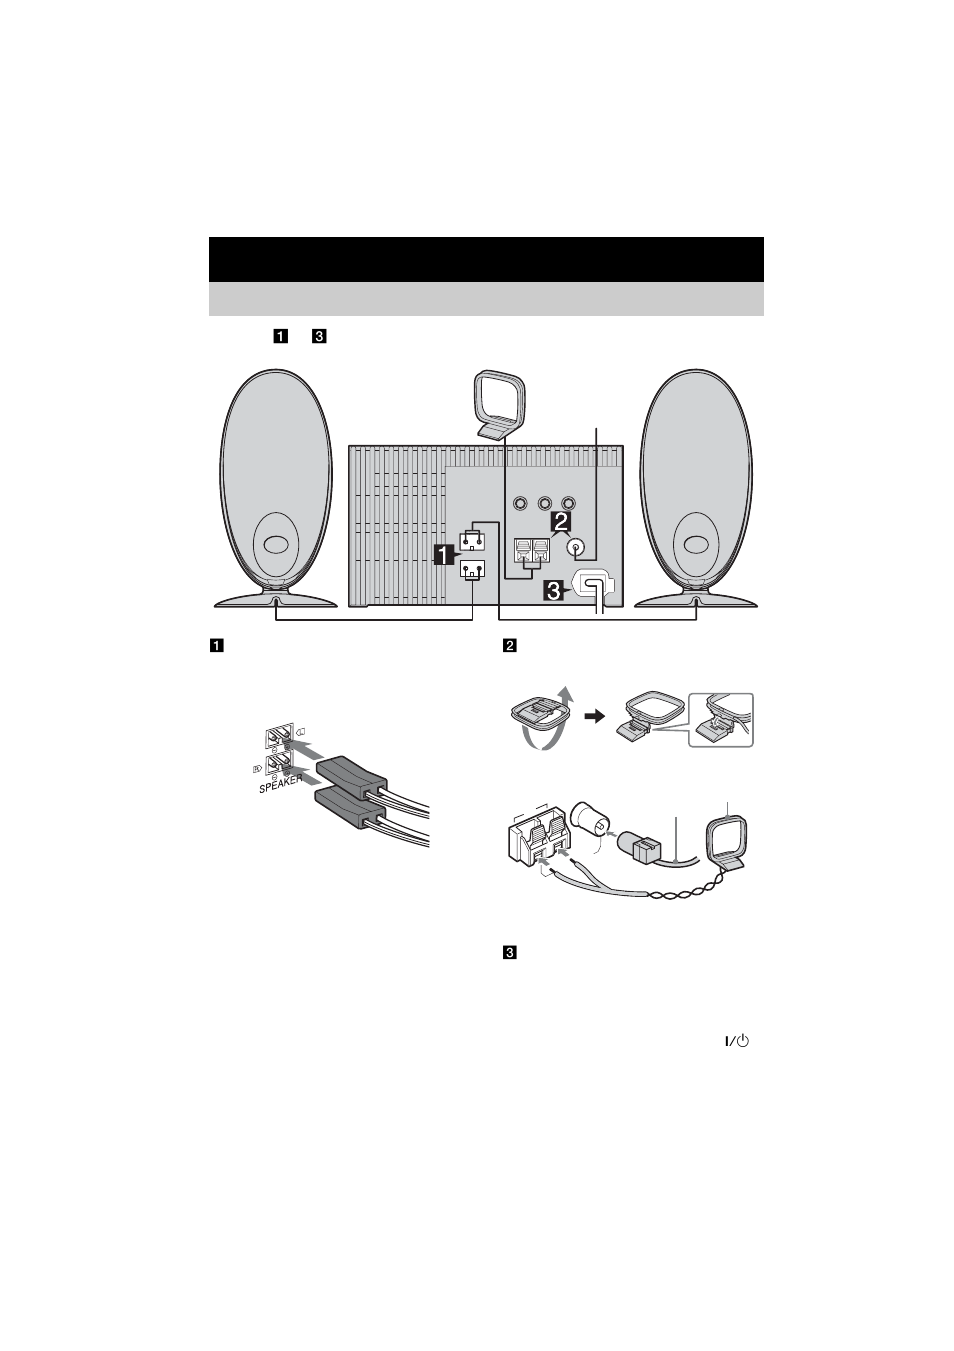 Komma igång, Ansluta systemet | Sony CMT-CQ1 User Manual | Page 70 / 112